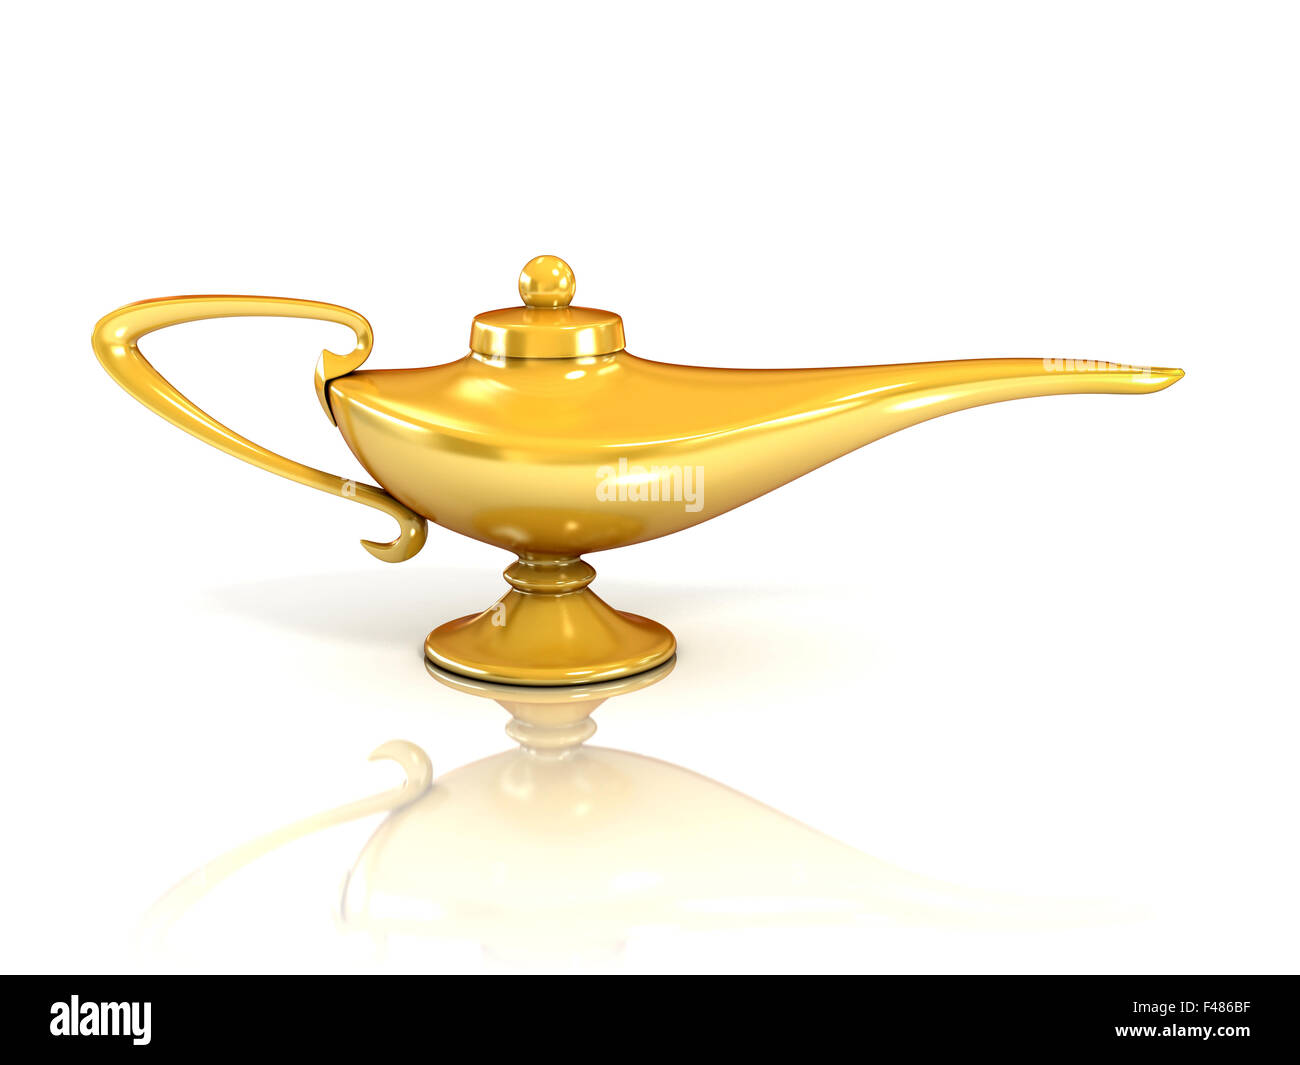 Aladdin magic lamp 3d illustration Stock Photo - Alamy